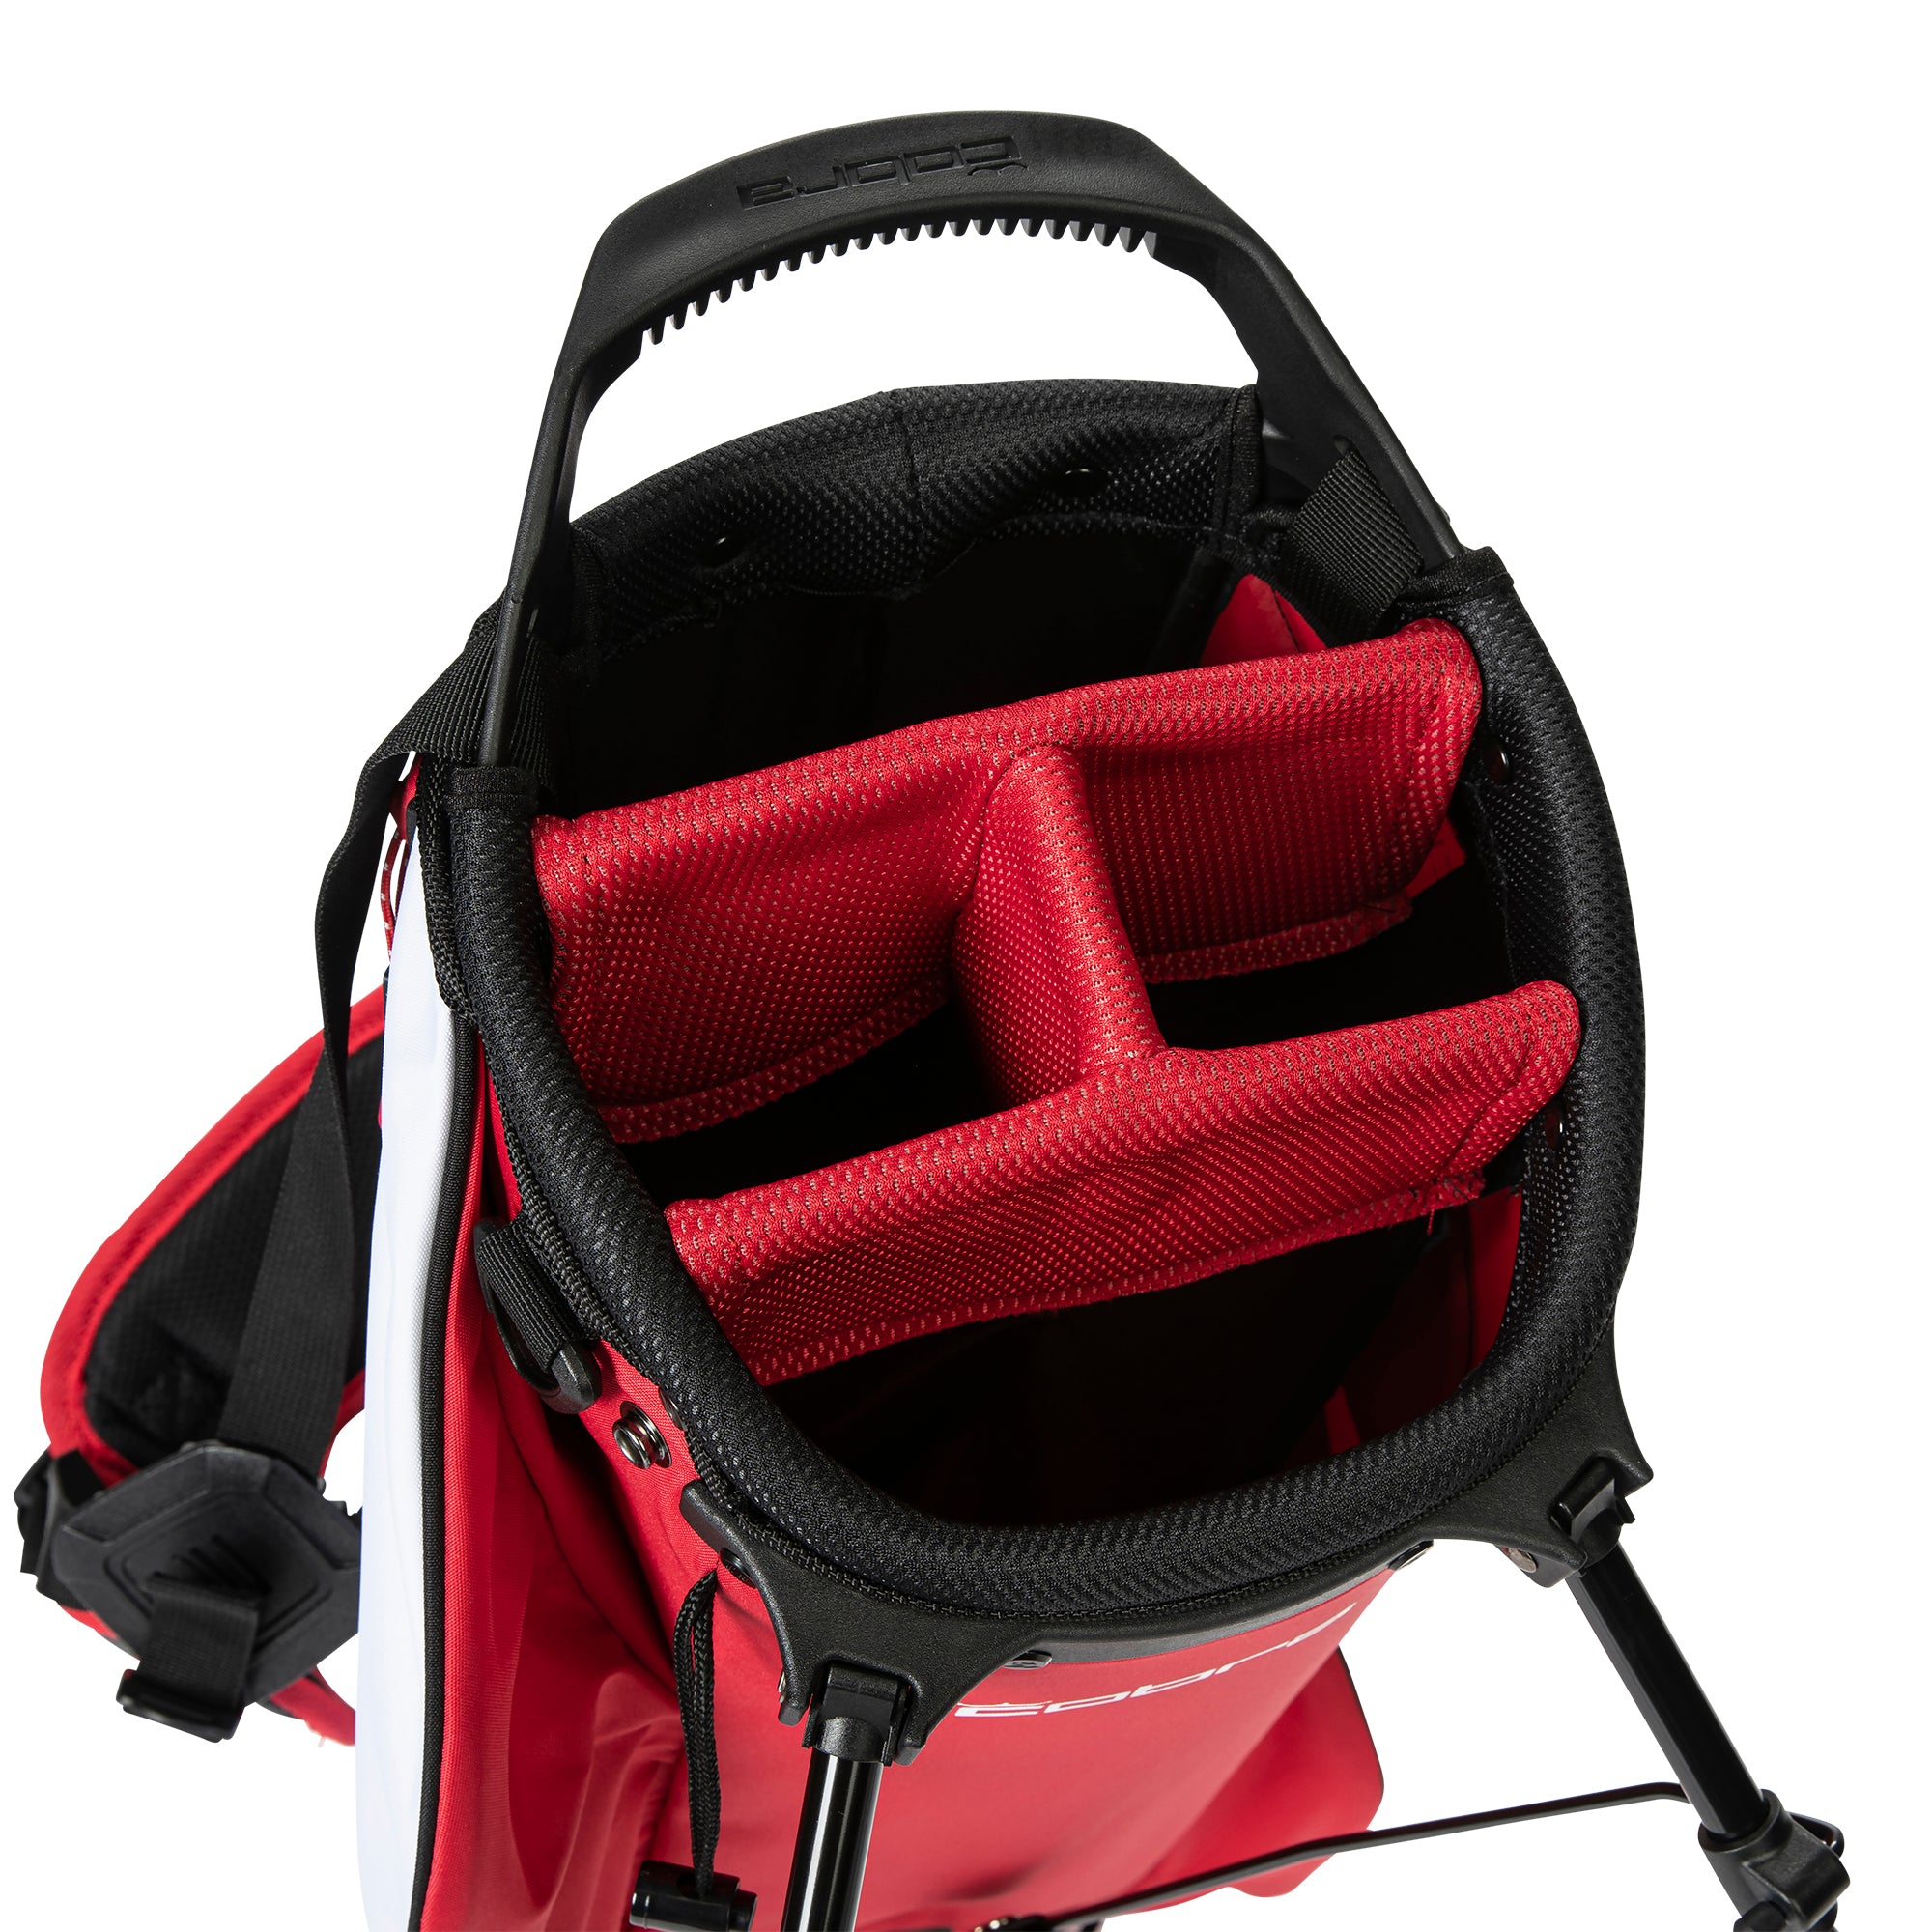 cobra-golf-ultralight-pro-stand-bag-909526-red-black-04-function18